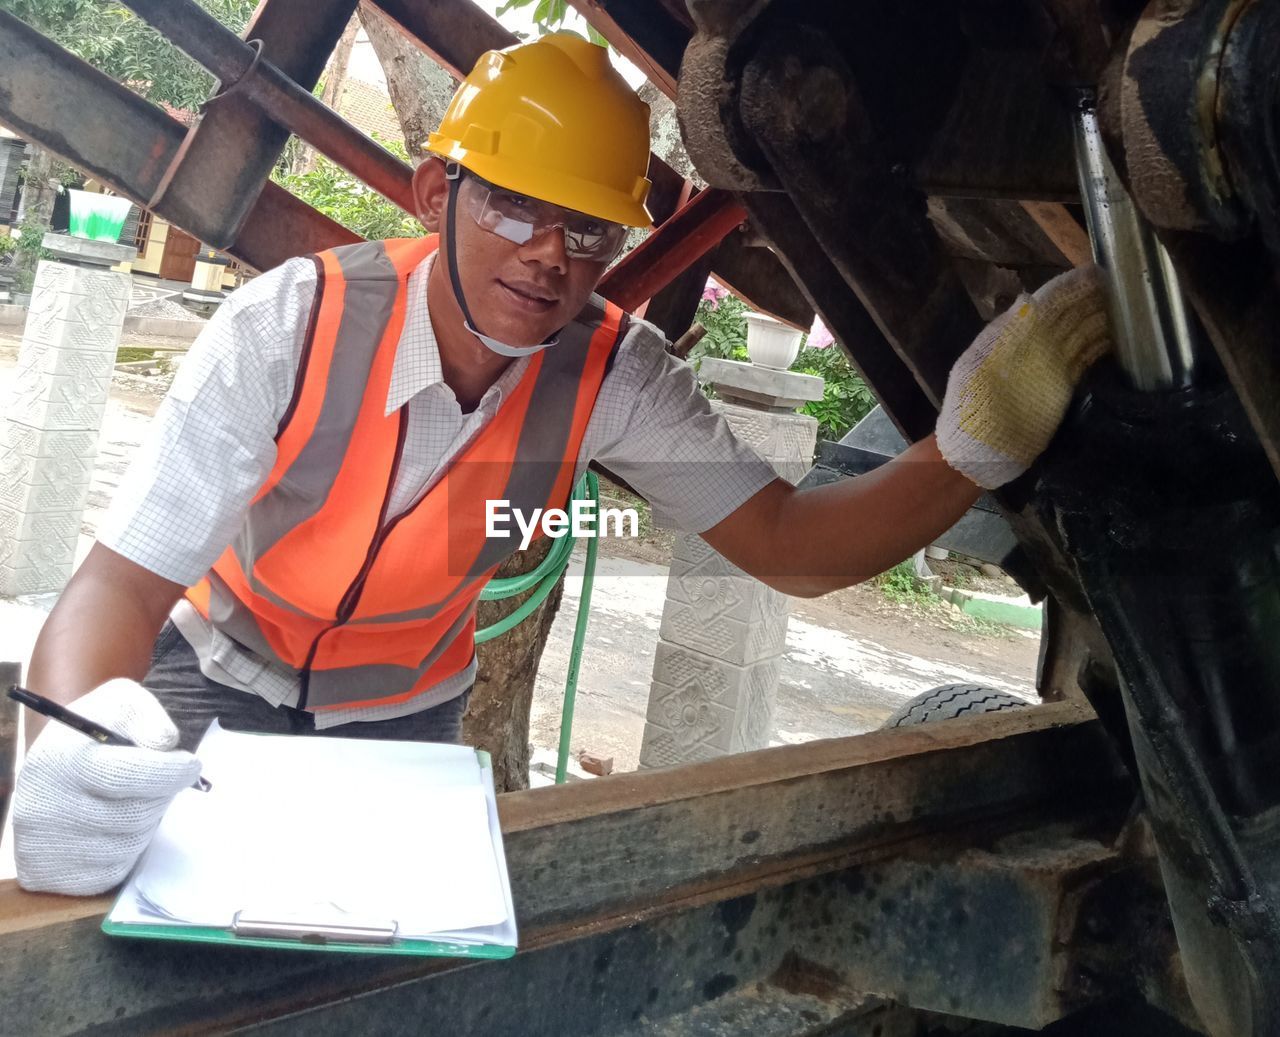 Engineer inspecting truck